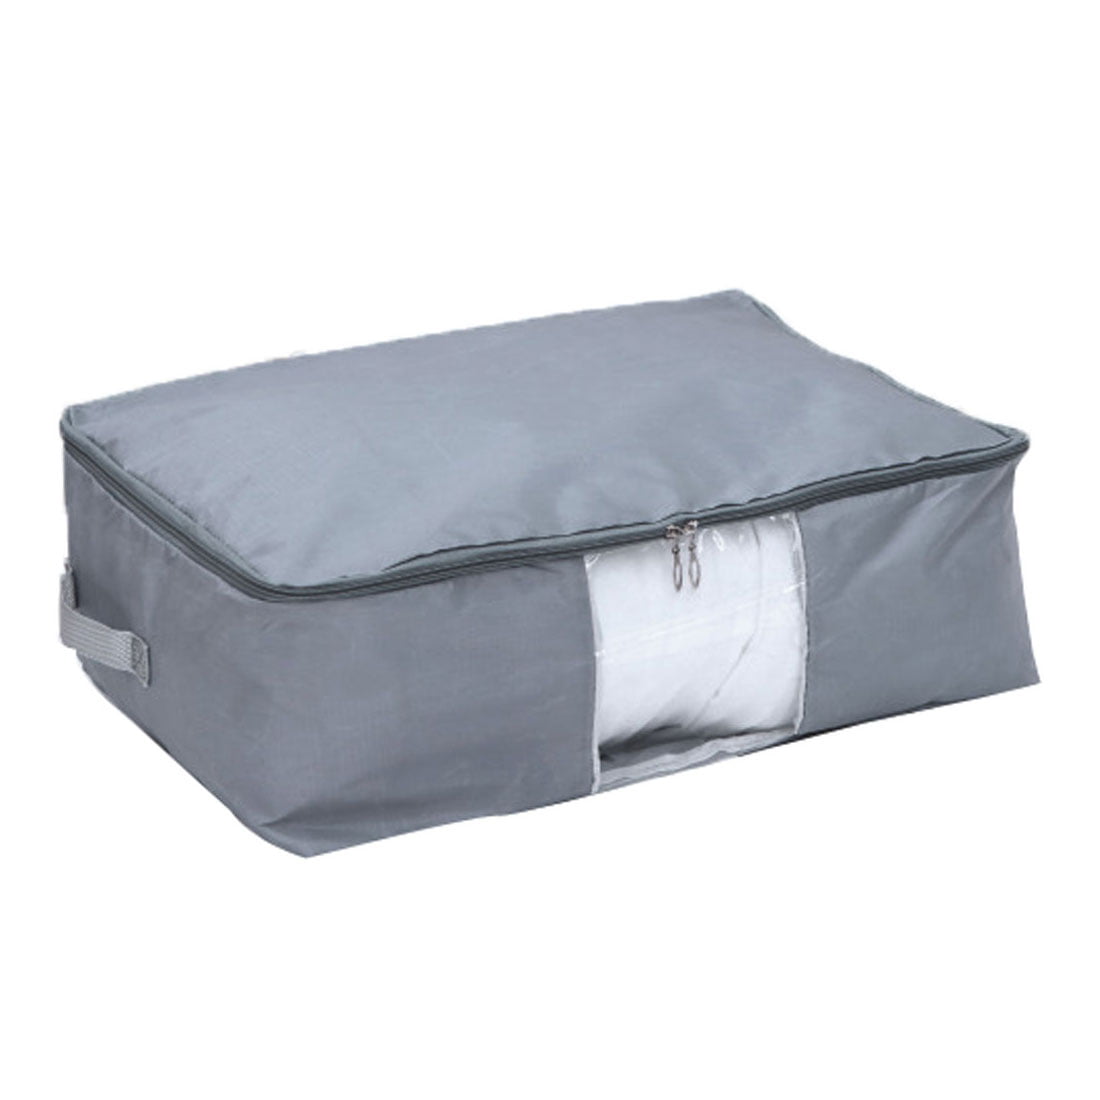 Clothes Beddings Zip Lock Storage Bag Organizer Container Gray ...